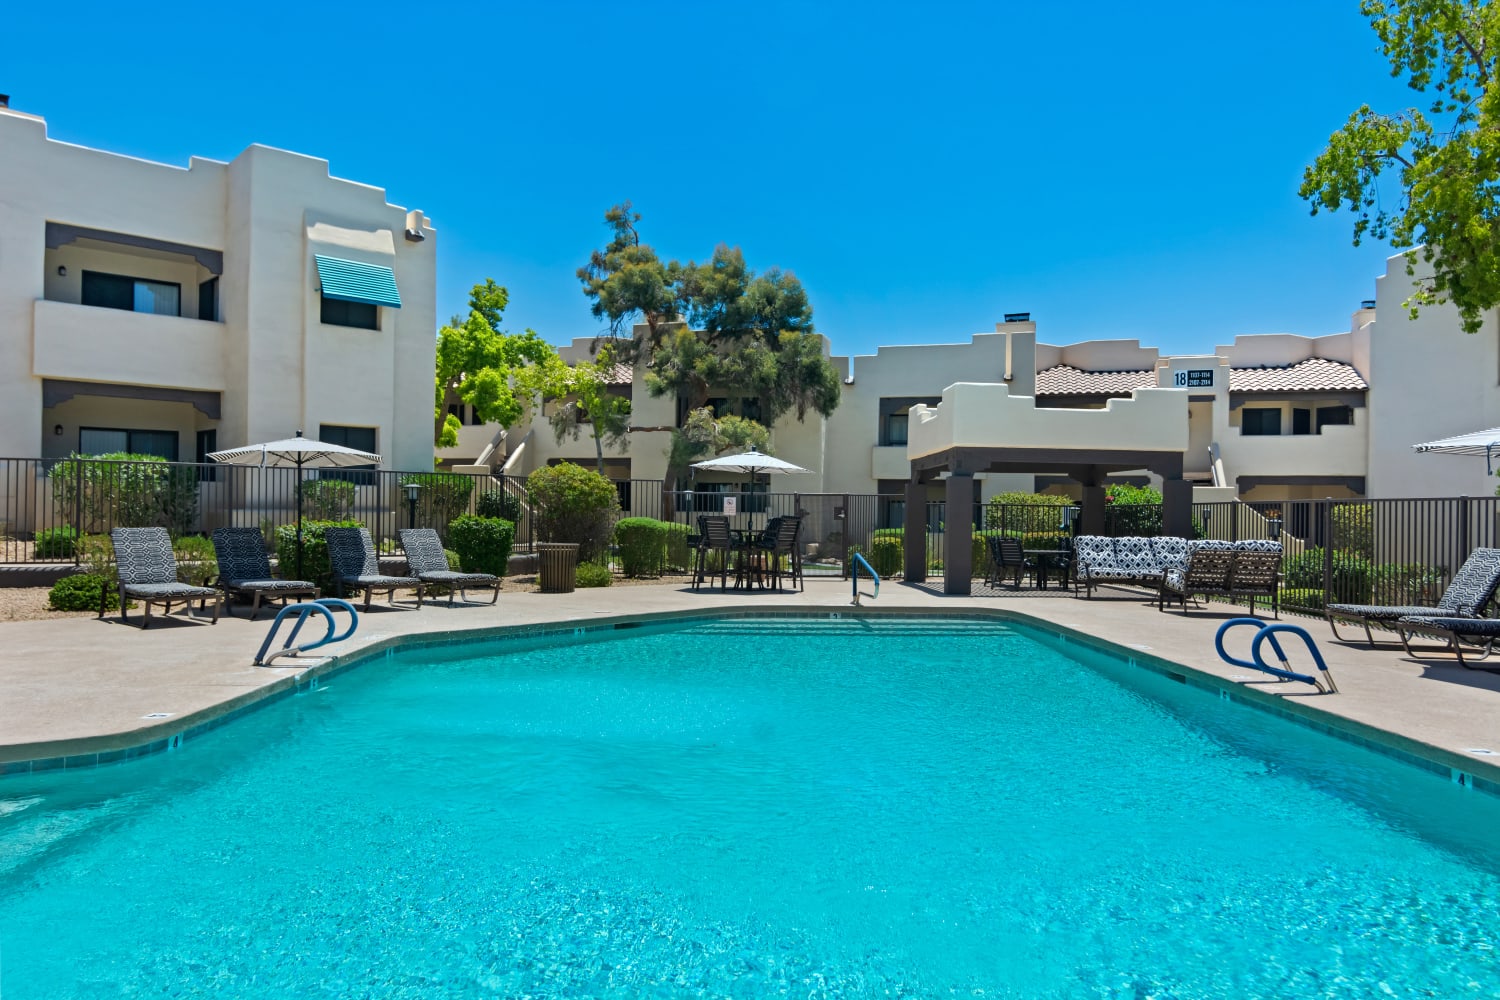 Swimming pool at Casa Santa Fe Apartments in Scottsdale, Arizona